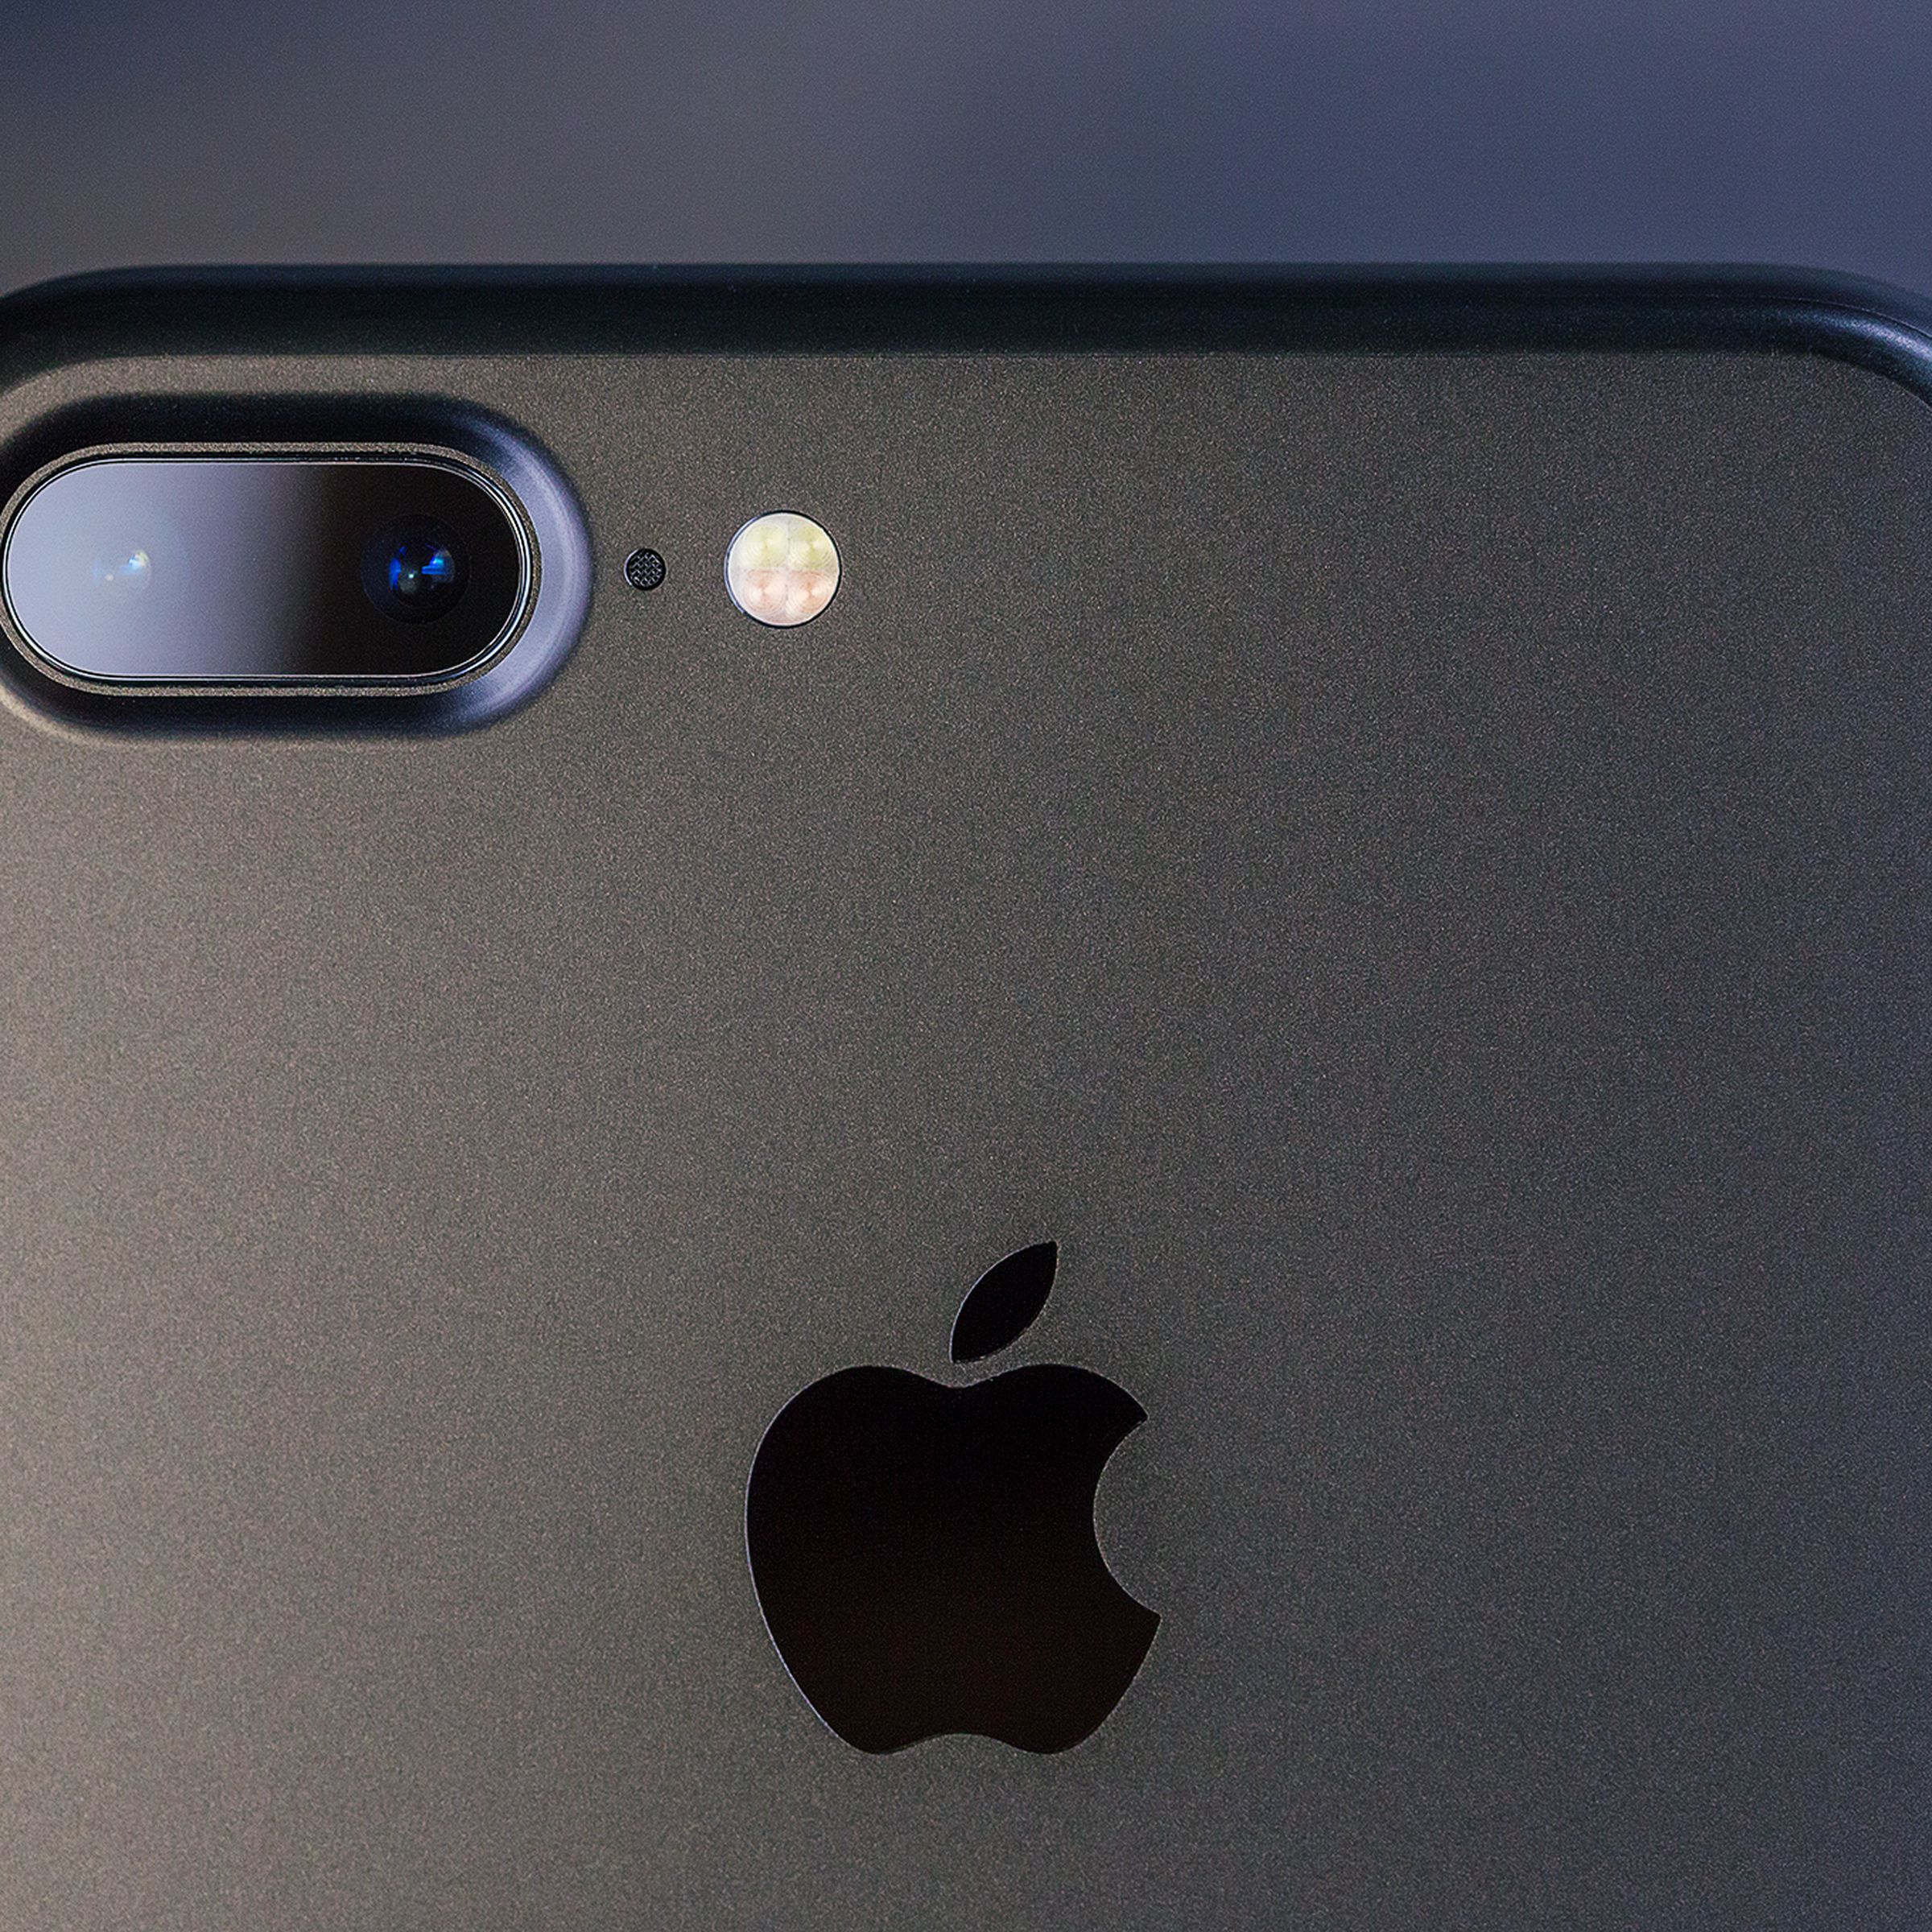 iPhone 7 Plus rear closeup showing two camera module